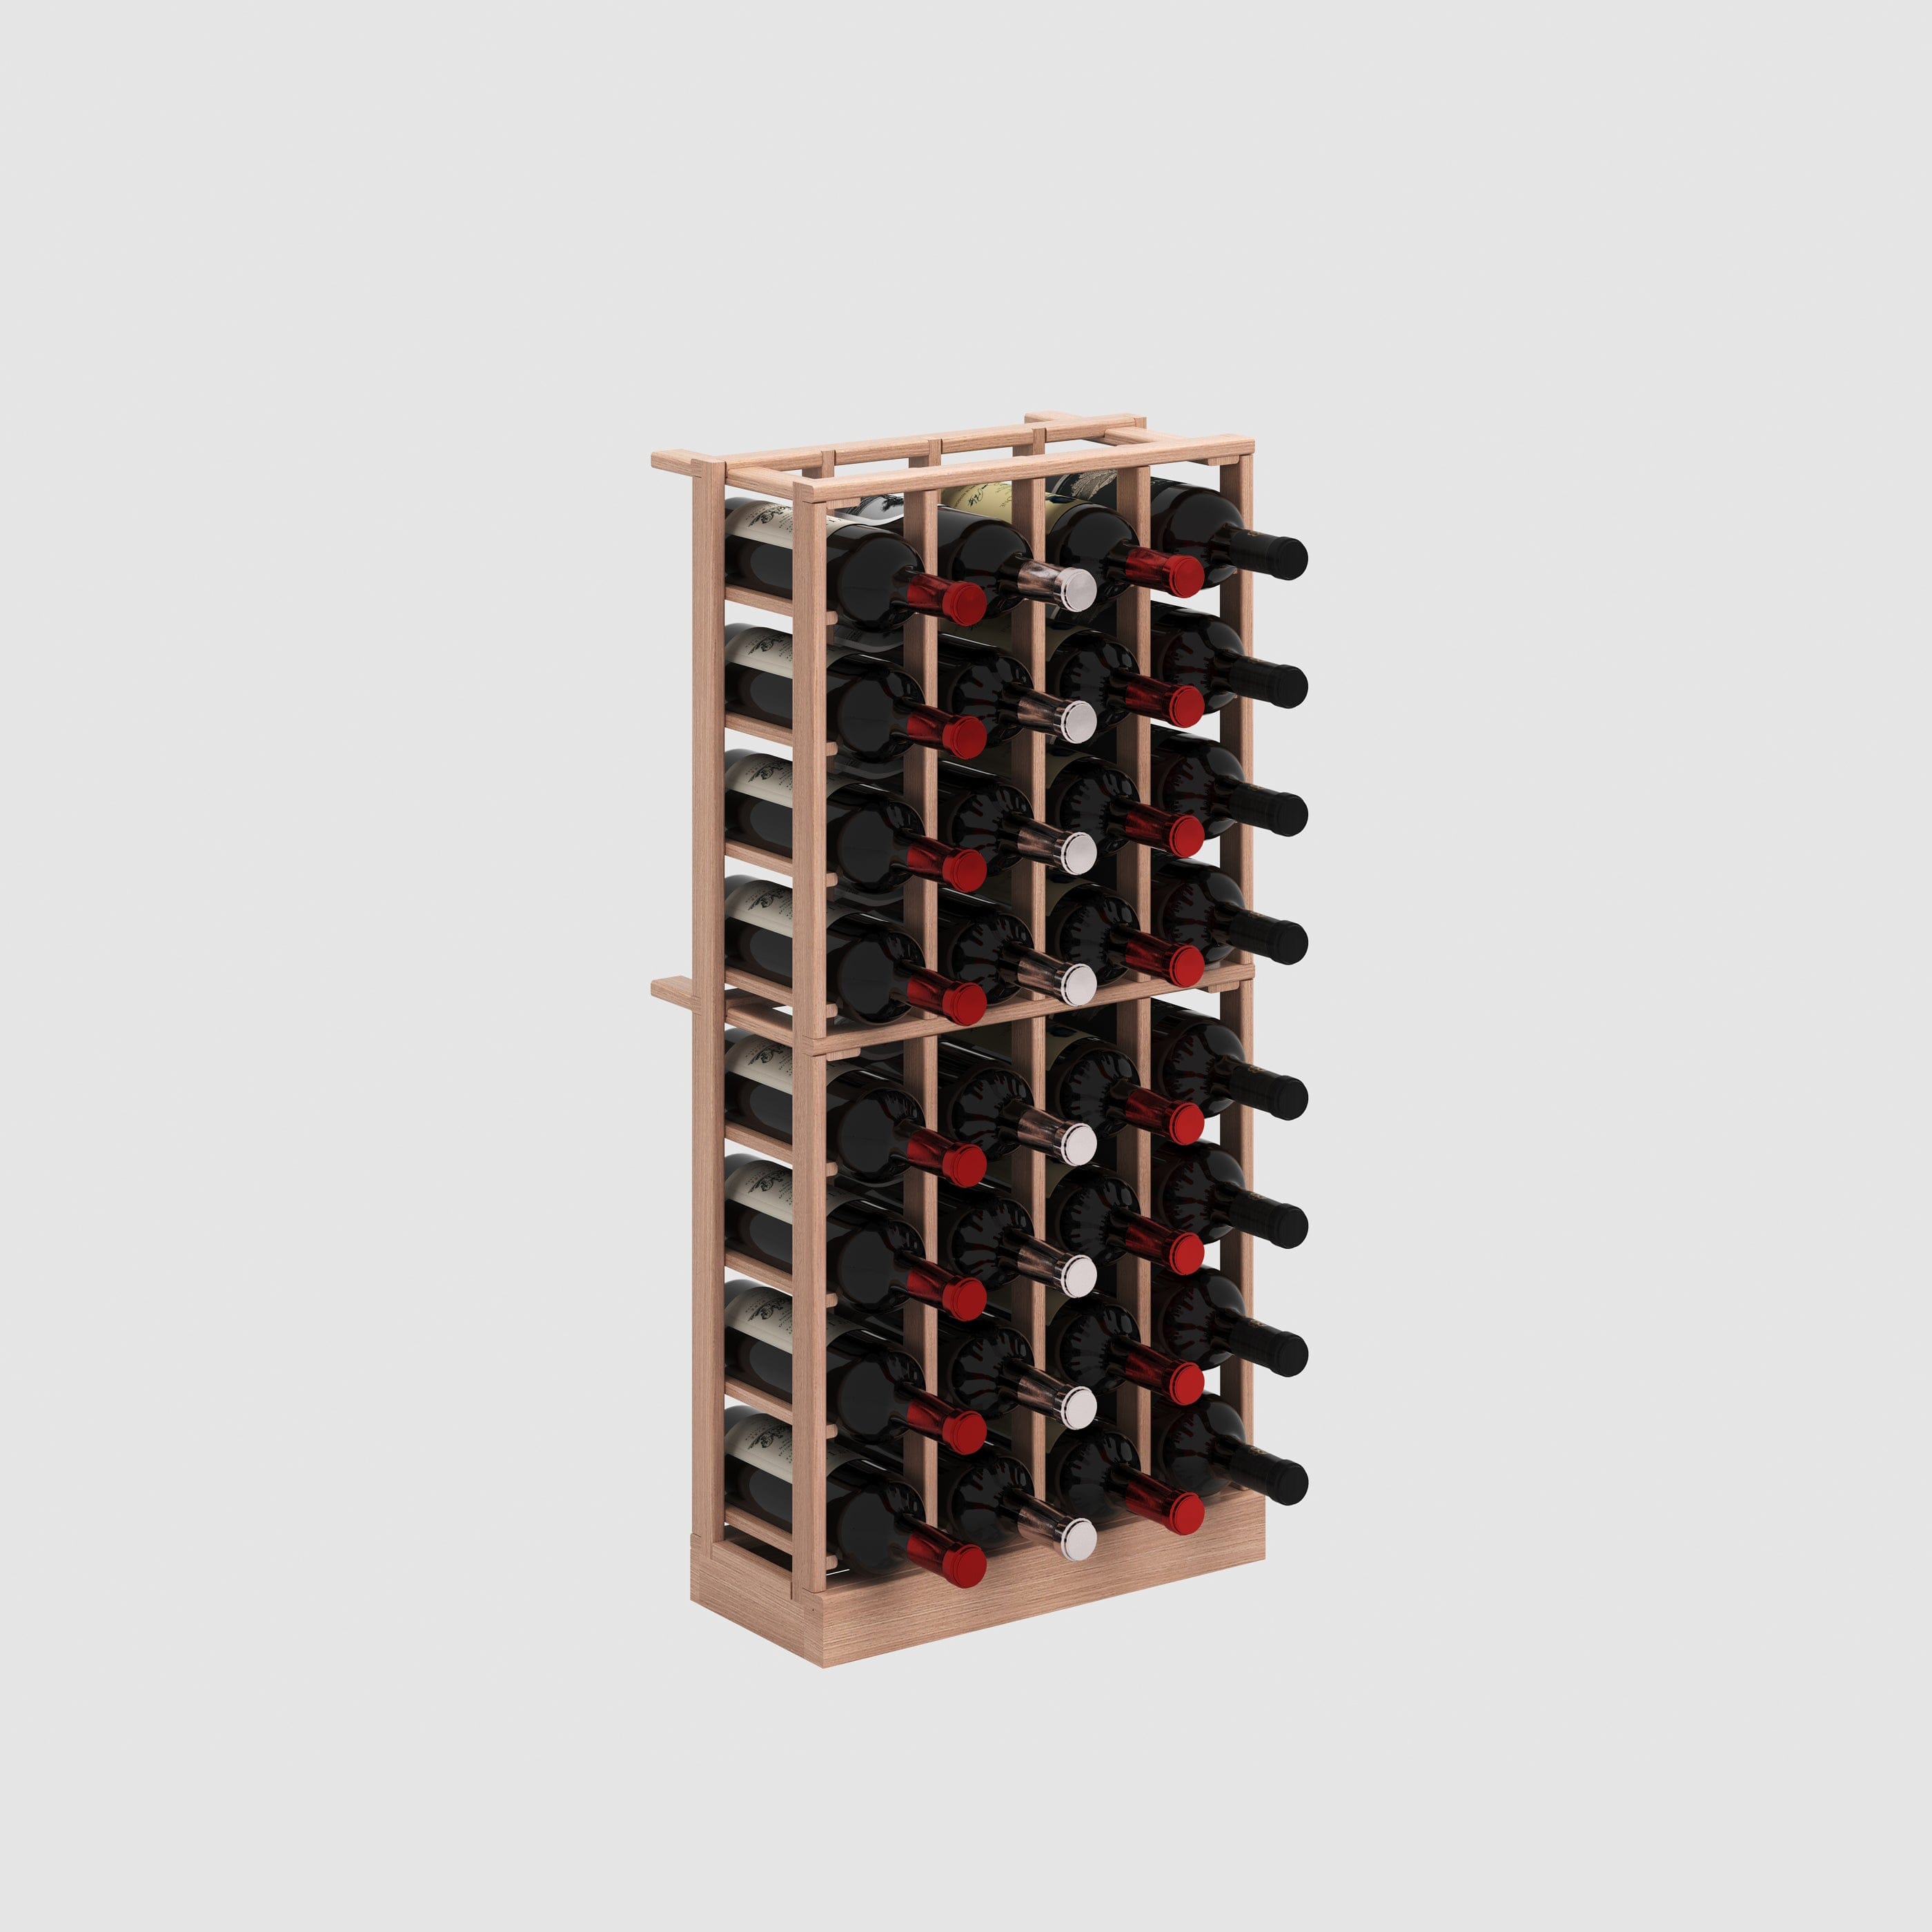 Kit Rack Individual Bottle Storage with base mold - wooden wine rack